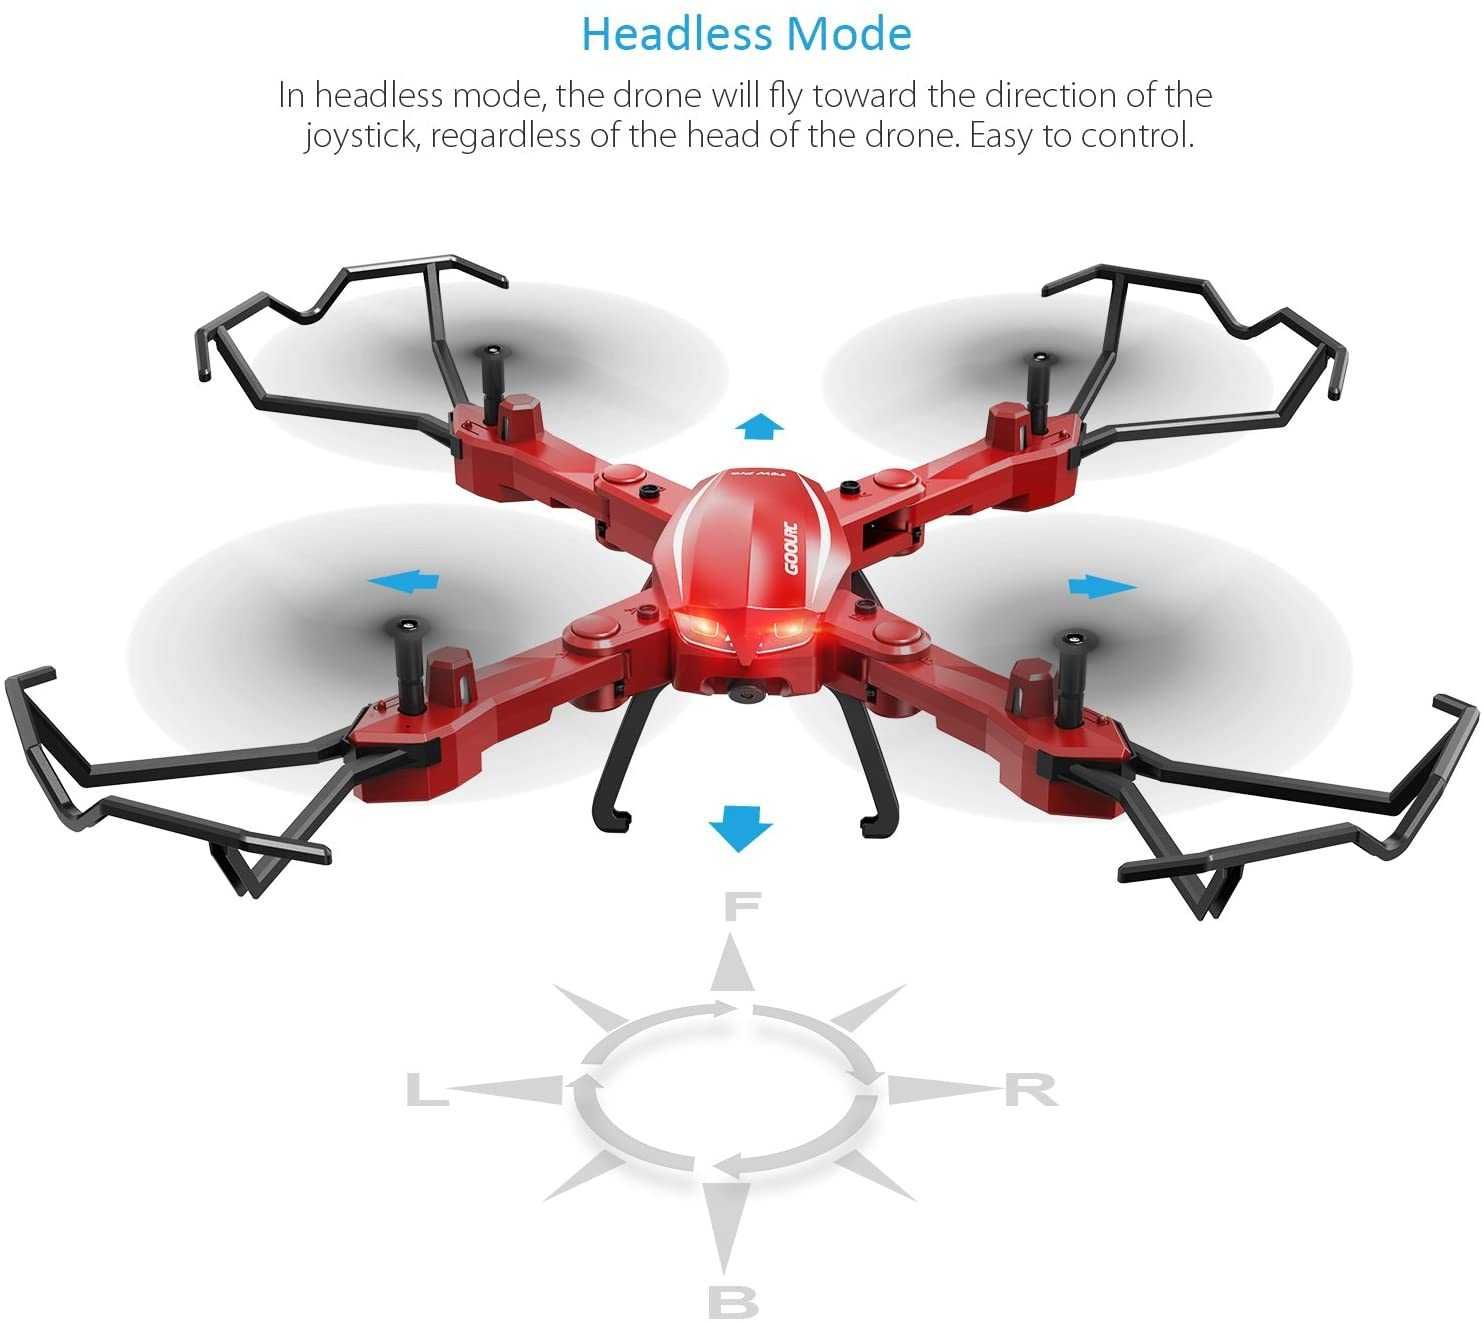 Drona GoolRC T5W Wifi FPV quadcopter, accesorii incluse